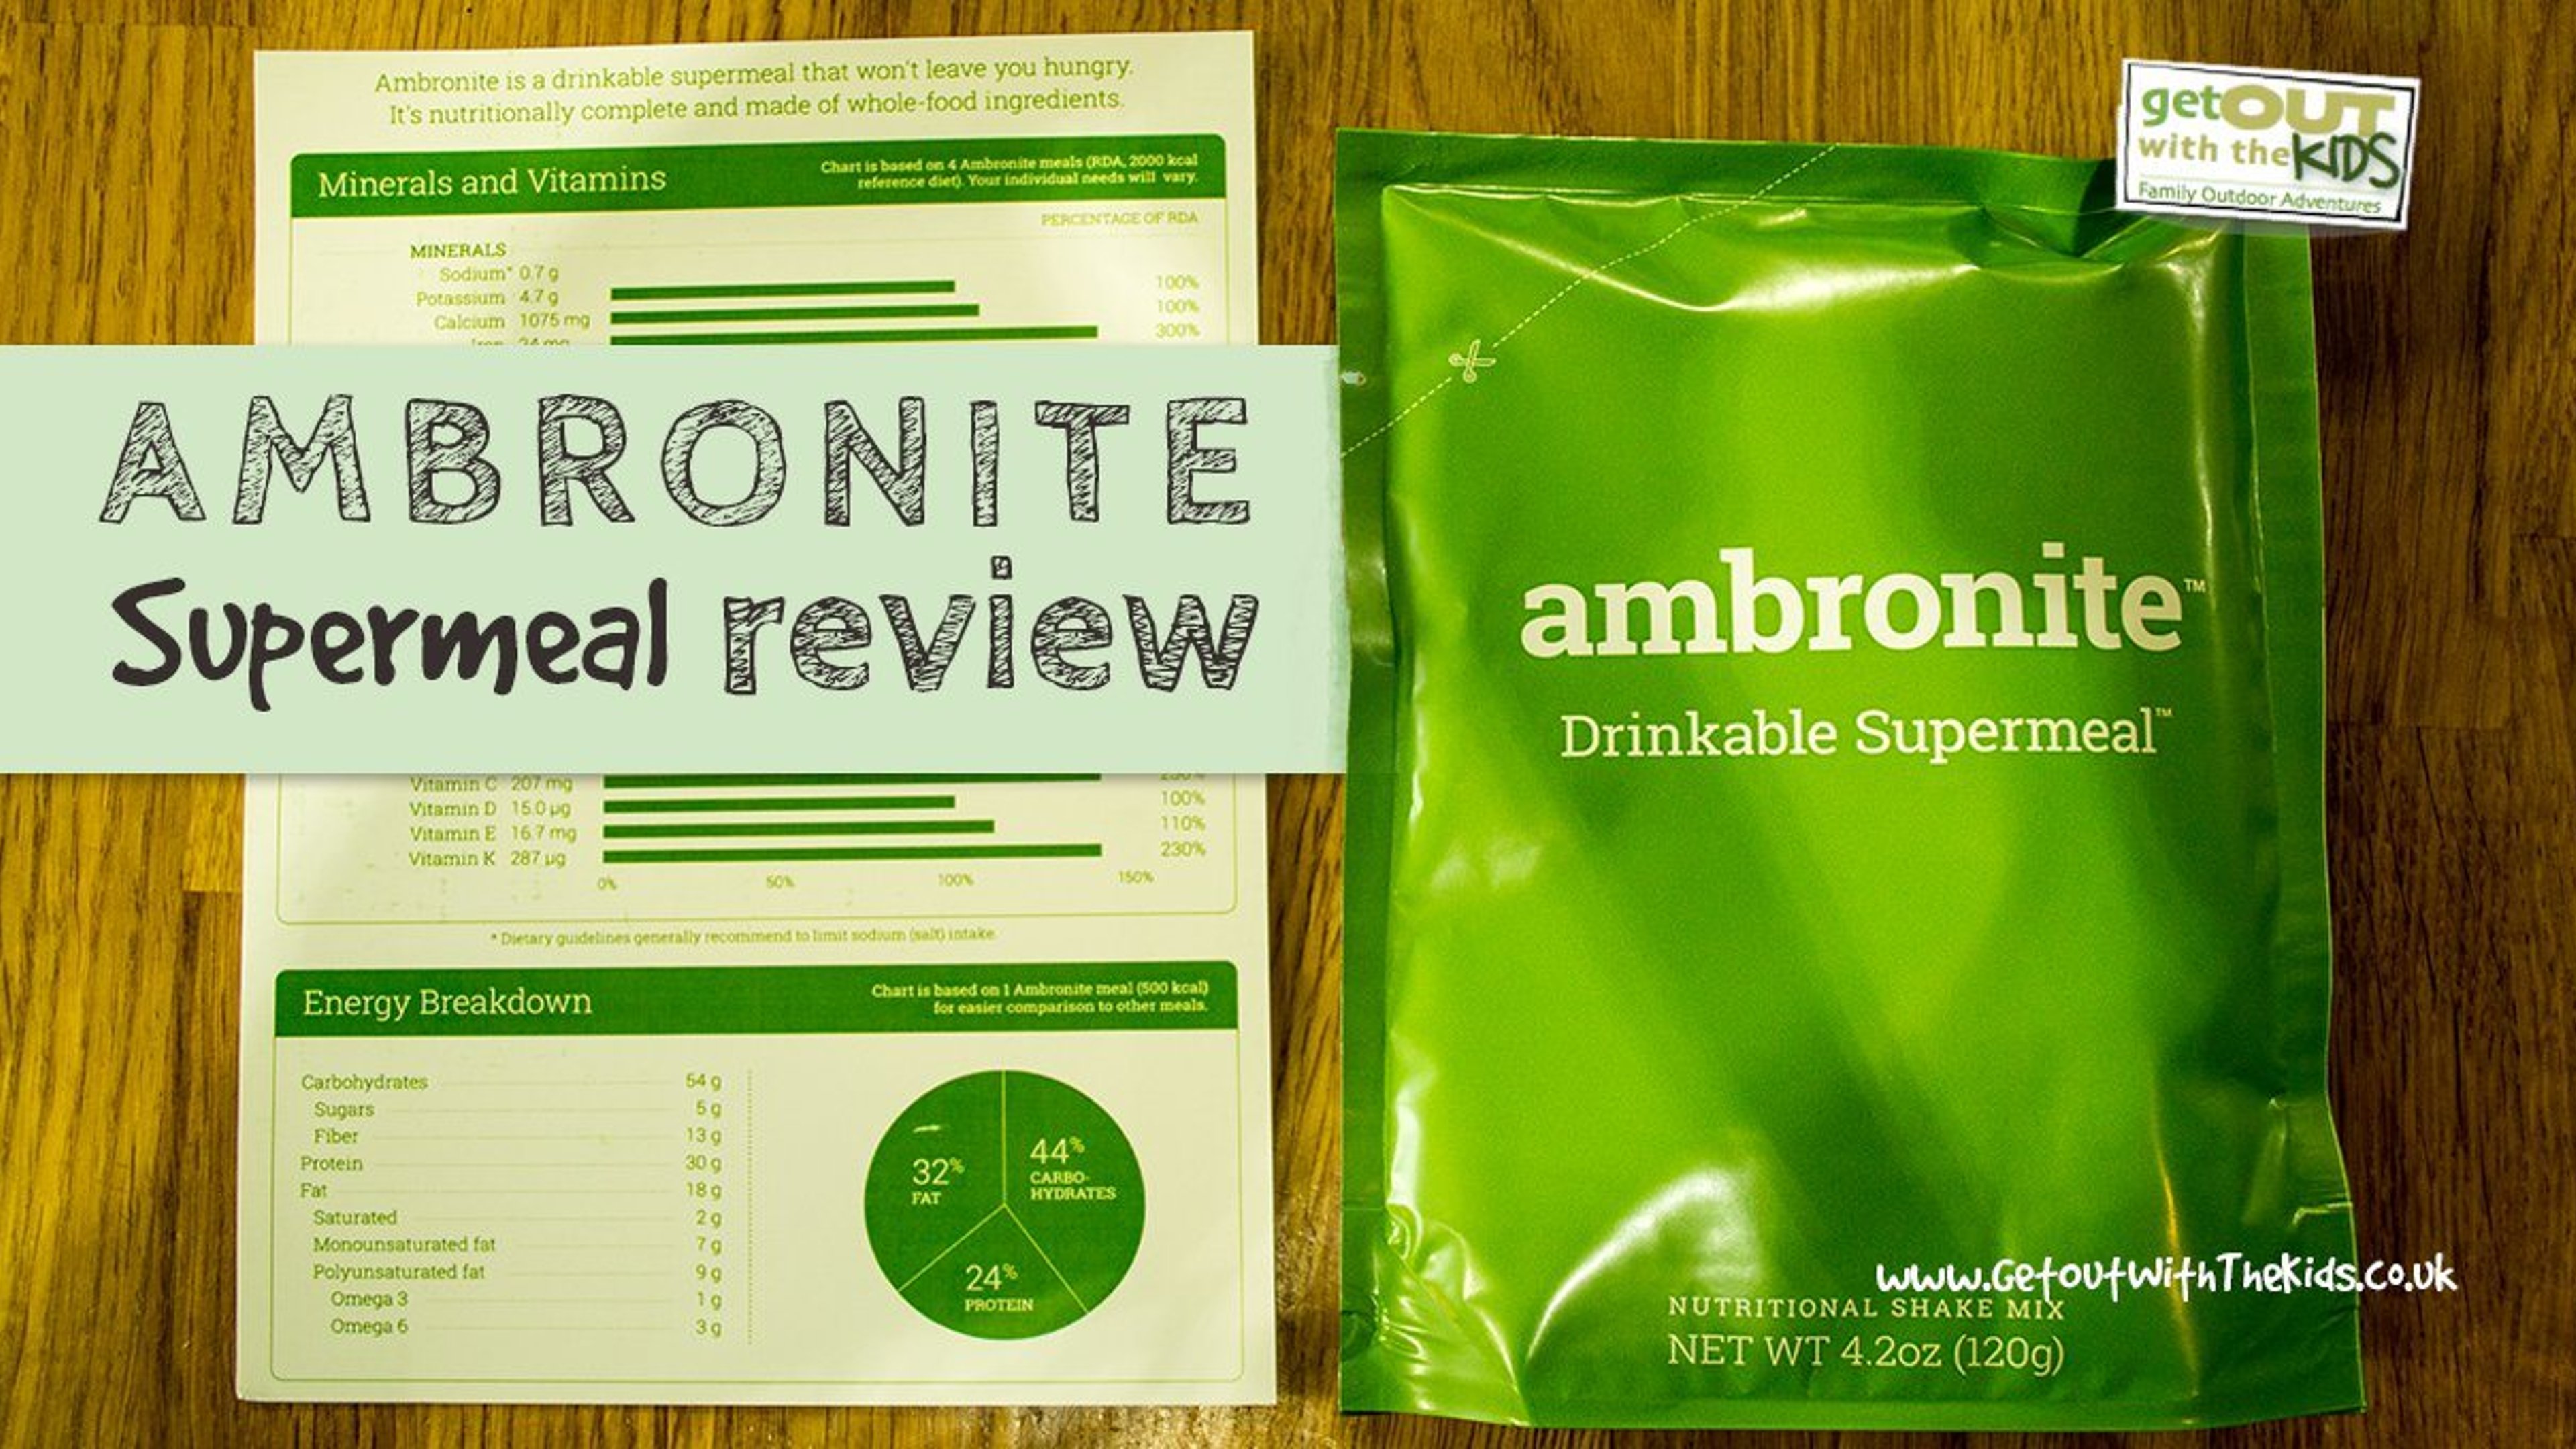 Ambronite Review